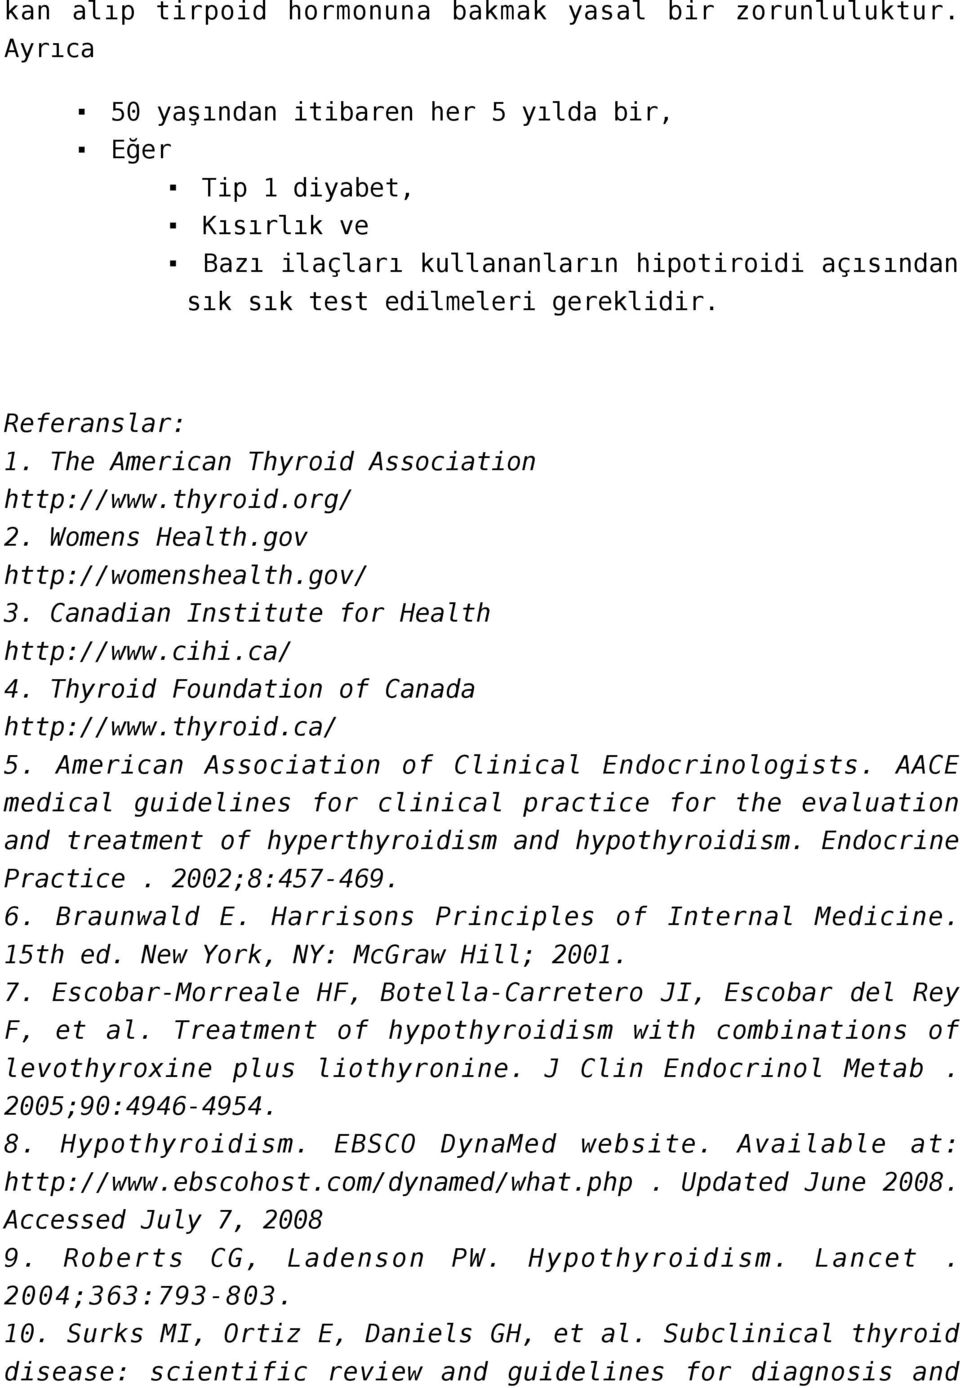 The American Thyroid Association http://www.thyroid.org/ 2. Womens Health.gov http://womenshealth.gov/ 3. Canadian Institute for Health http://www.cihi.ca/ 4. Thyroid Foundation of Canada http://www.